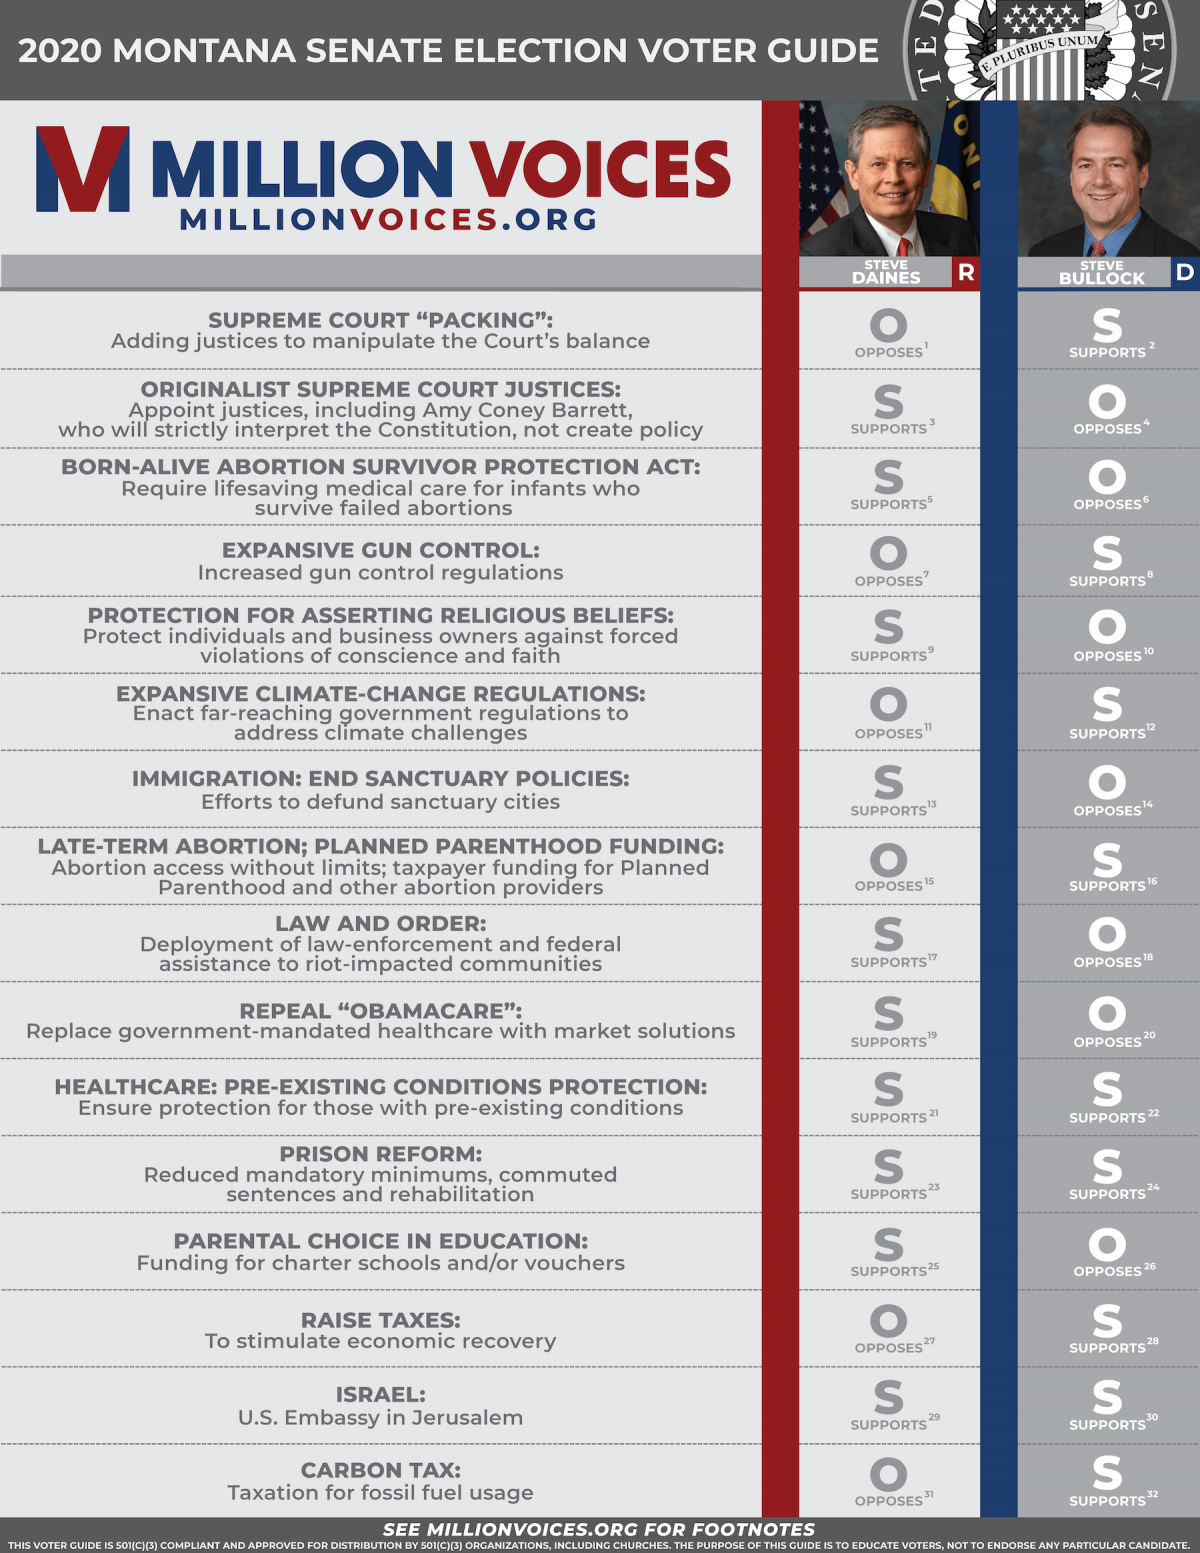 2020 Montana Senate Voter Guide Million Voices